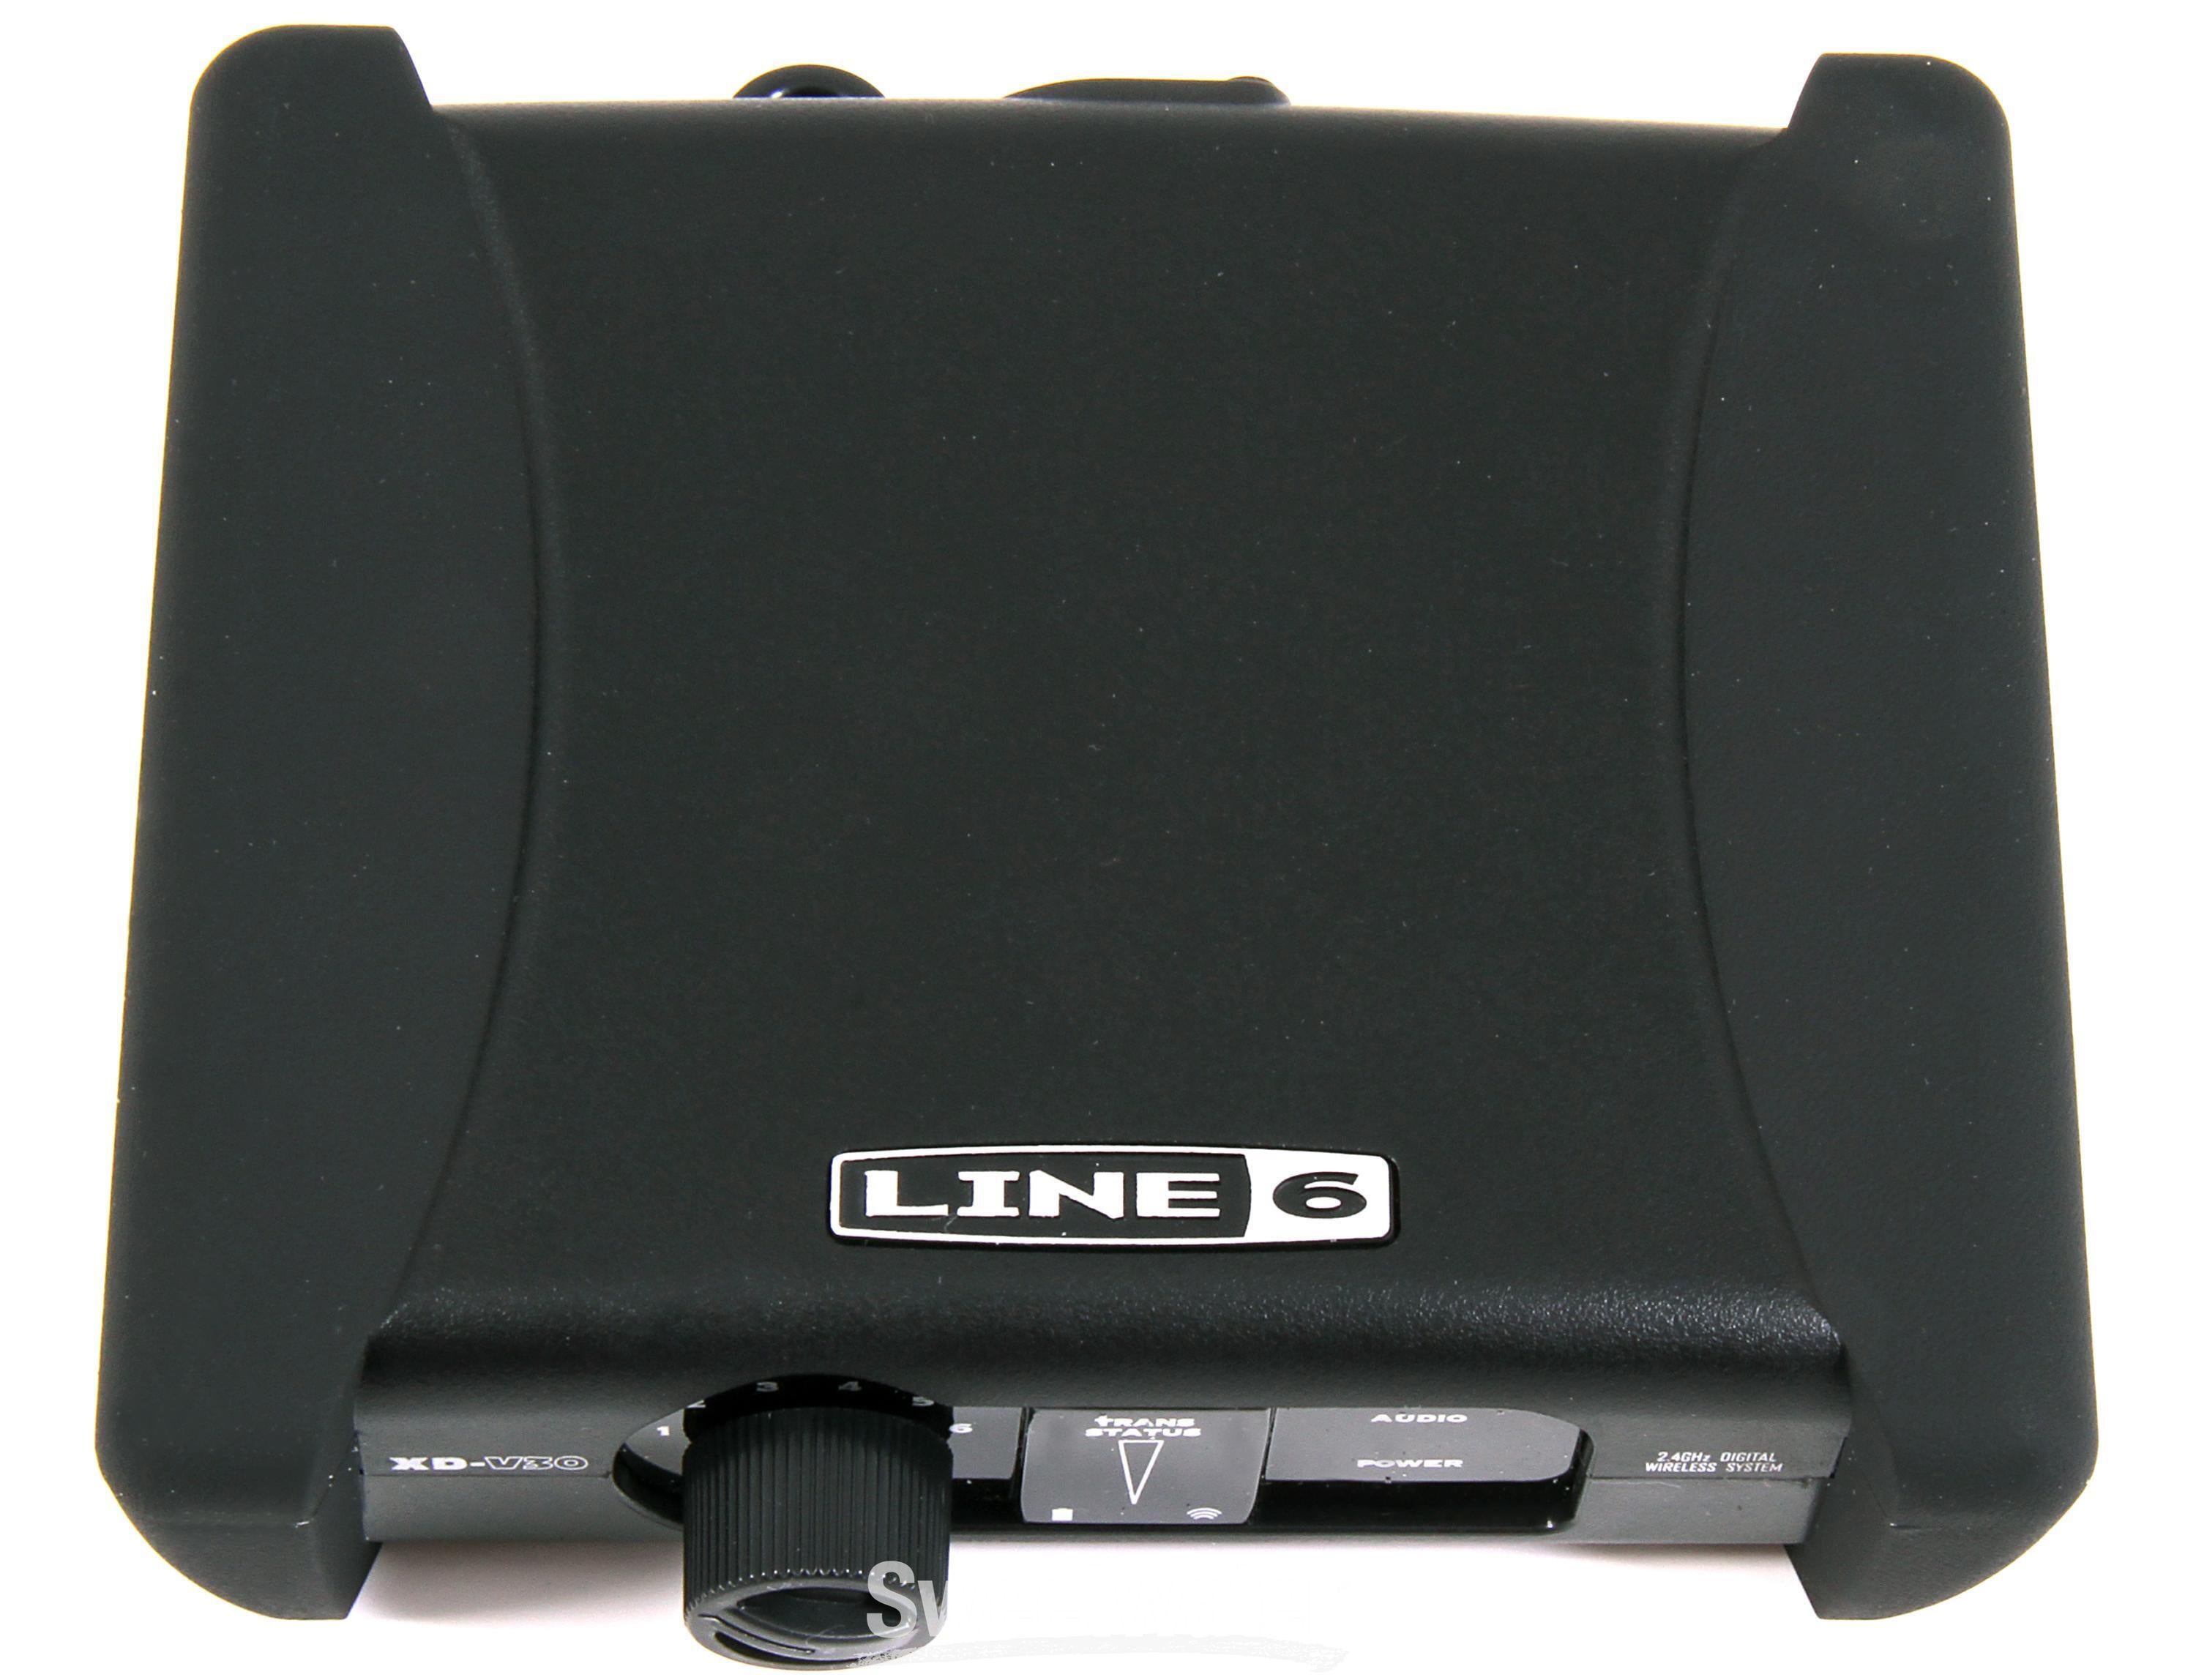 Line 6 XD-V30 - Handheld System | Sweetwater